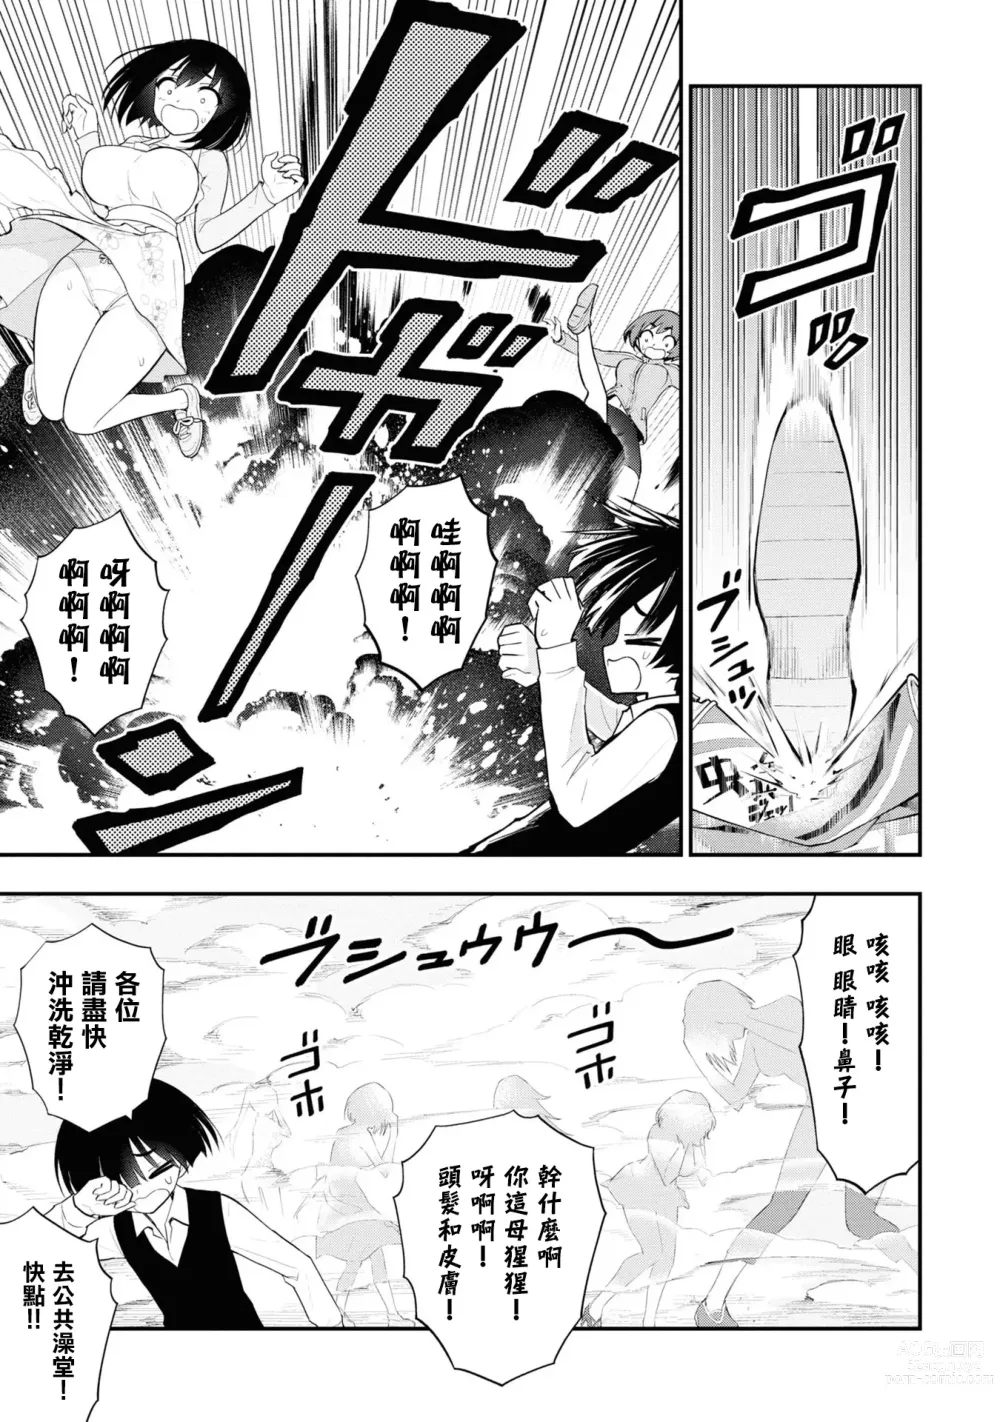 Page 161 of manga 淫獄小區 VOL.3